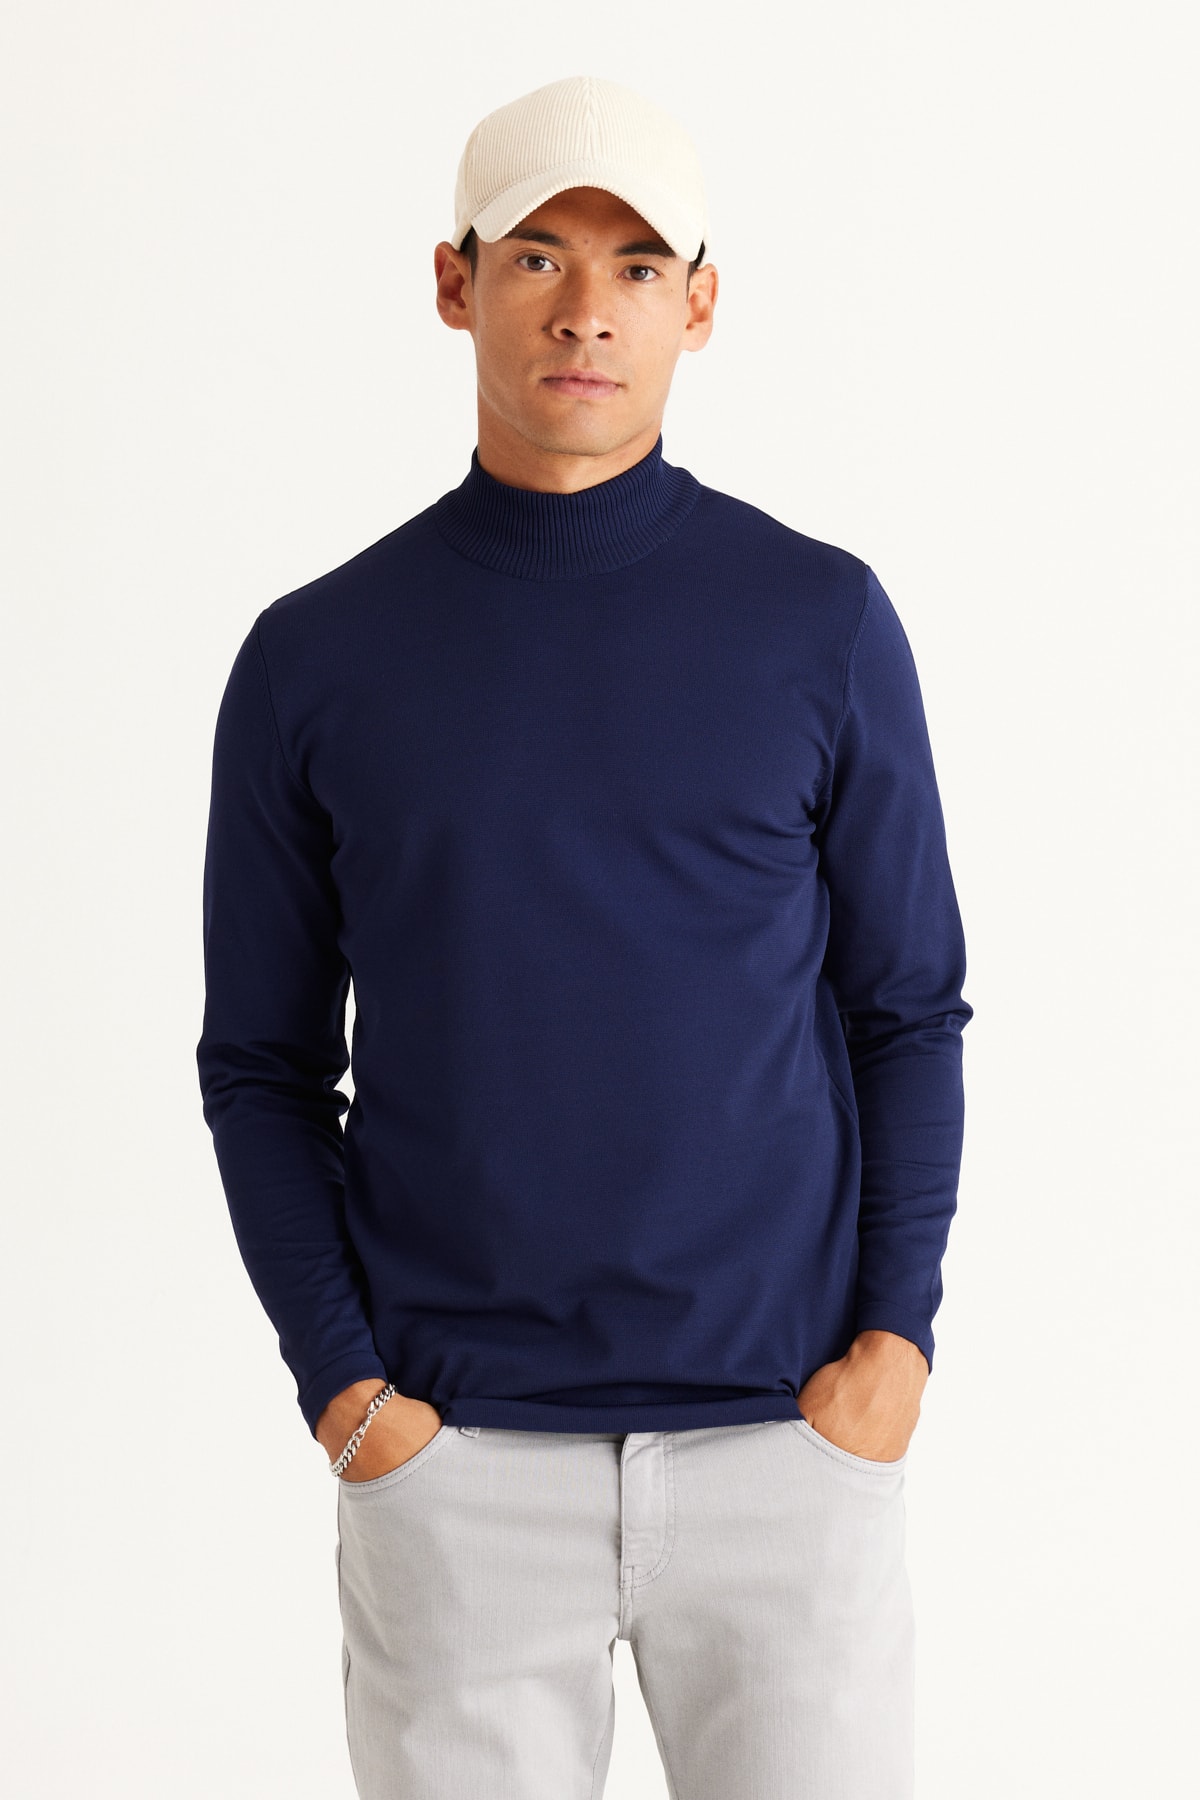 ALTINYILDIZ CLASSICS Men's Navy Blue Standard Fit Normal Cut Half Turtleneck Knitwear Sweater.